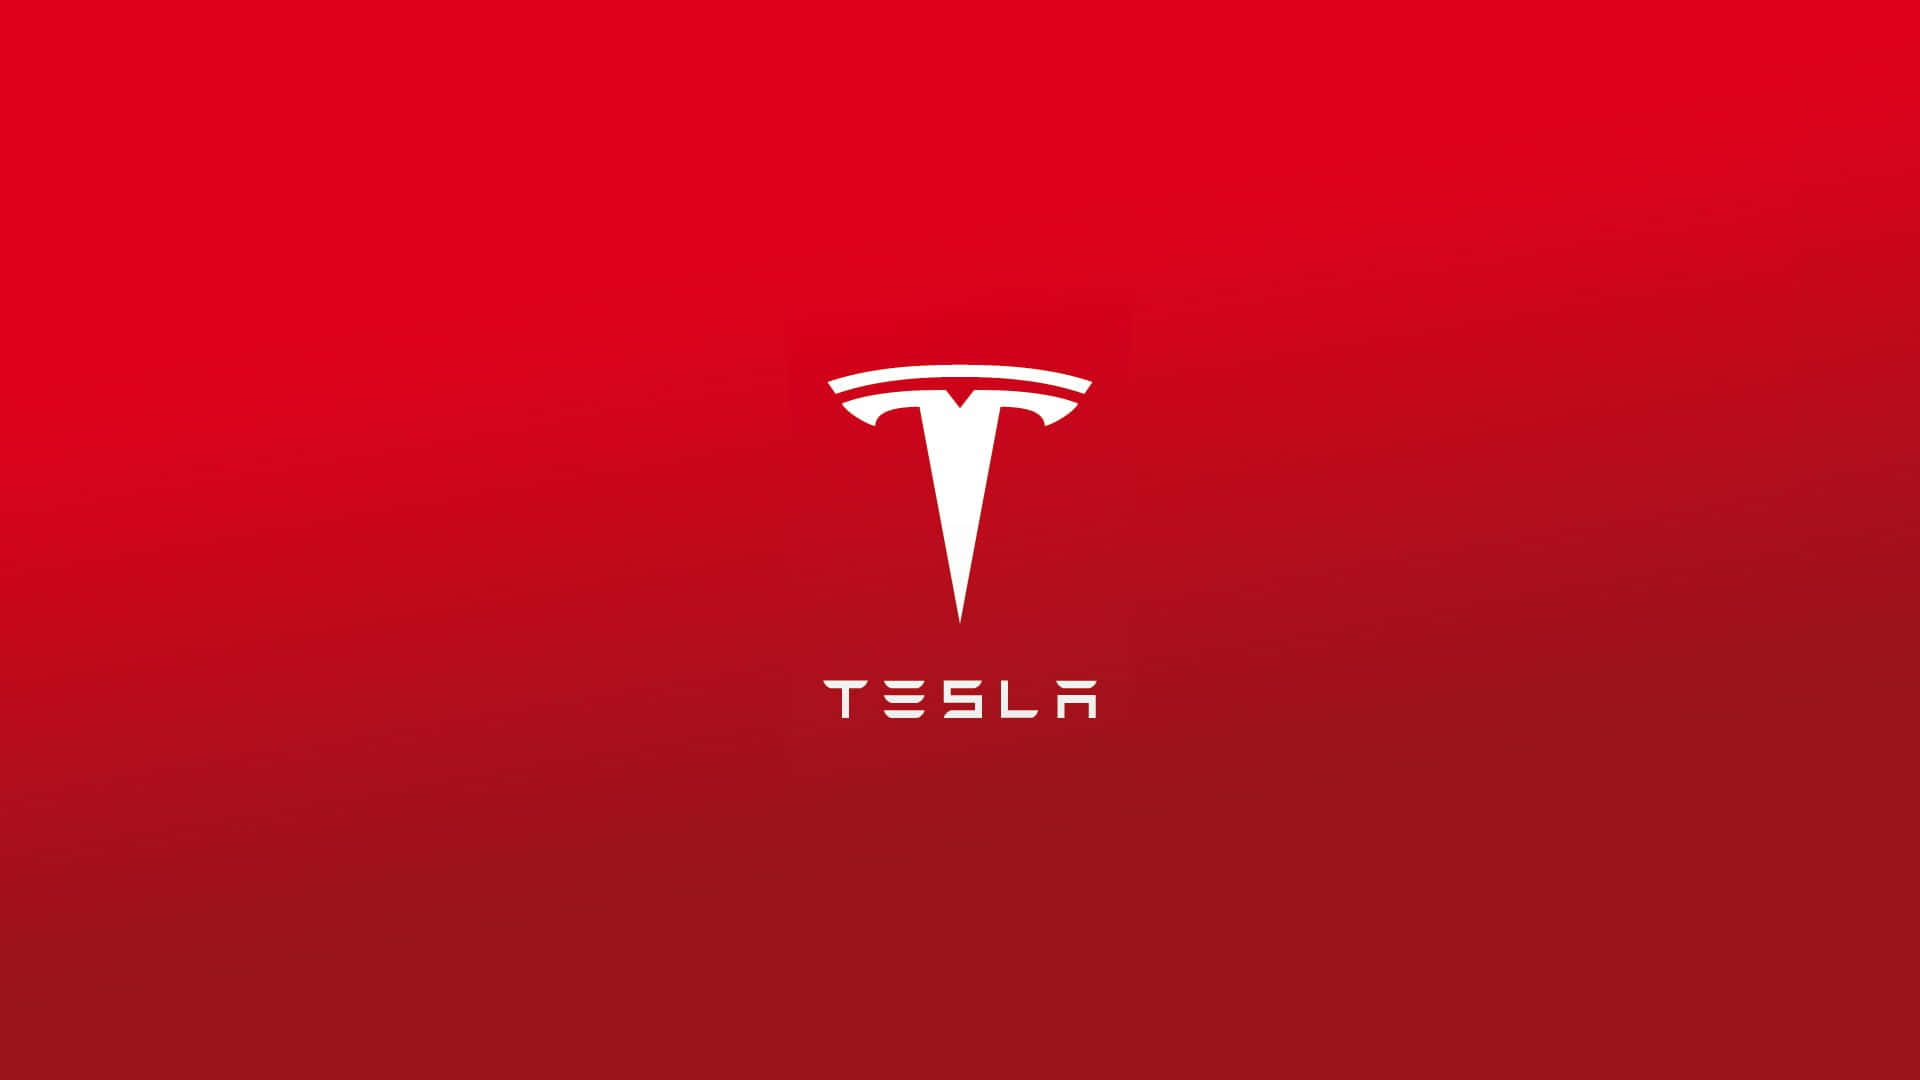 Tesla Bakgrund